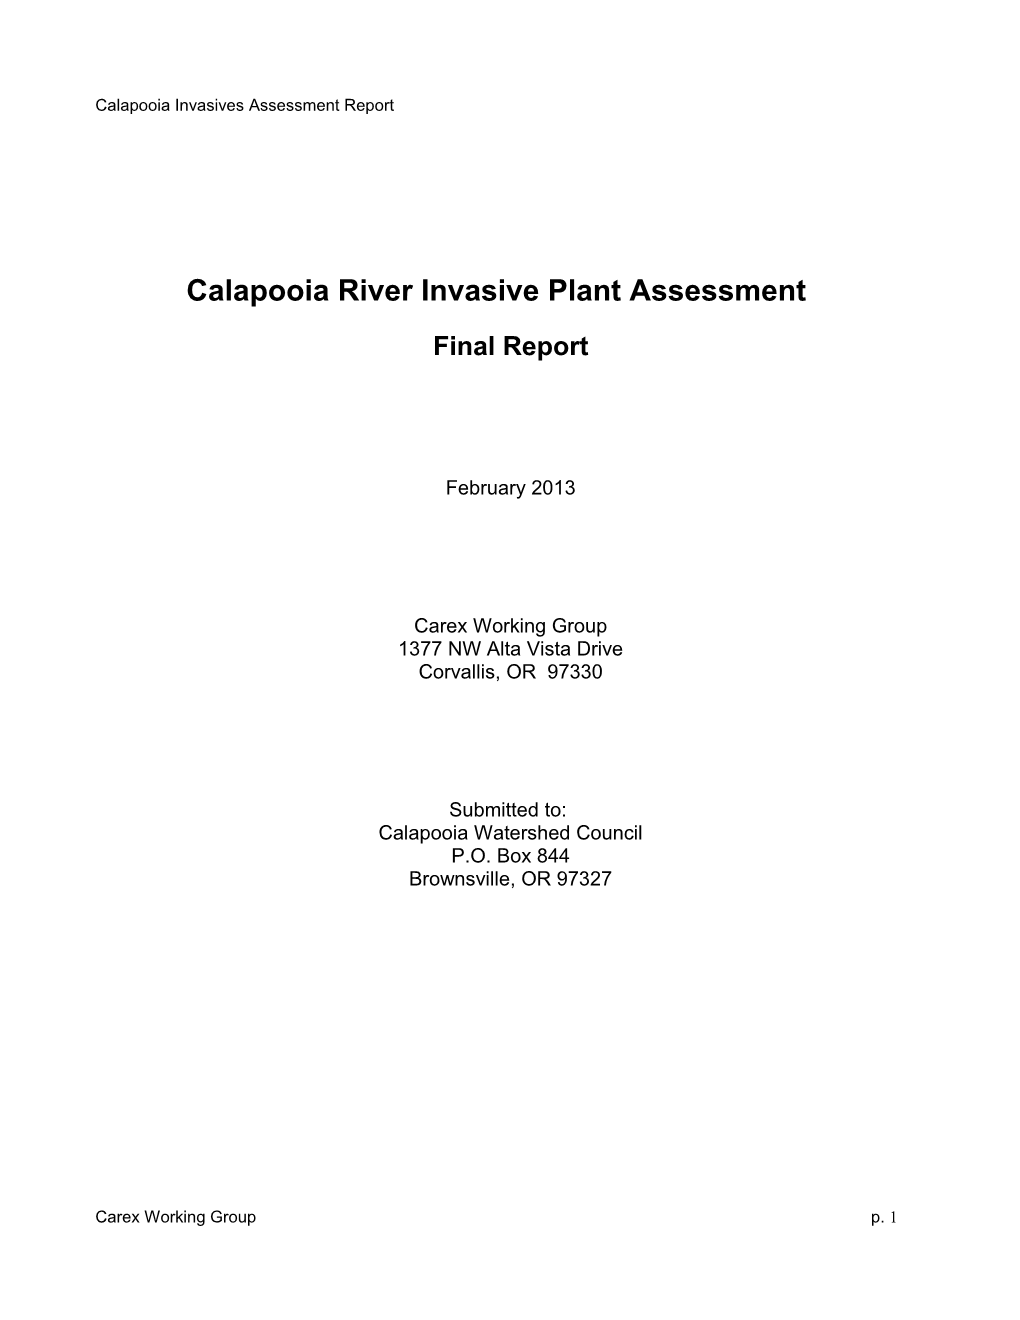 Calapooia River Invasive Plant Assessment